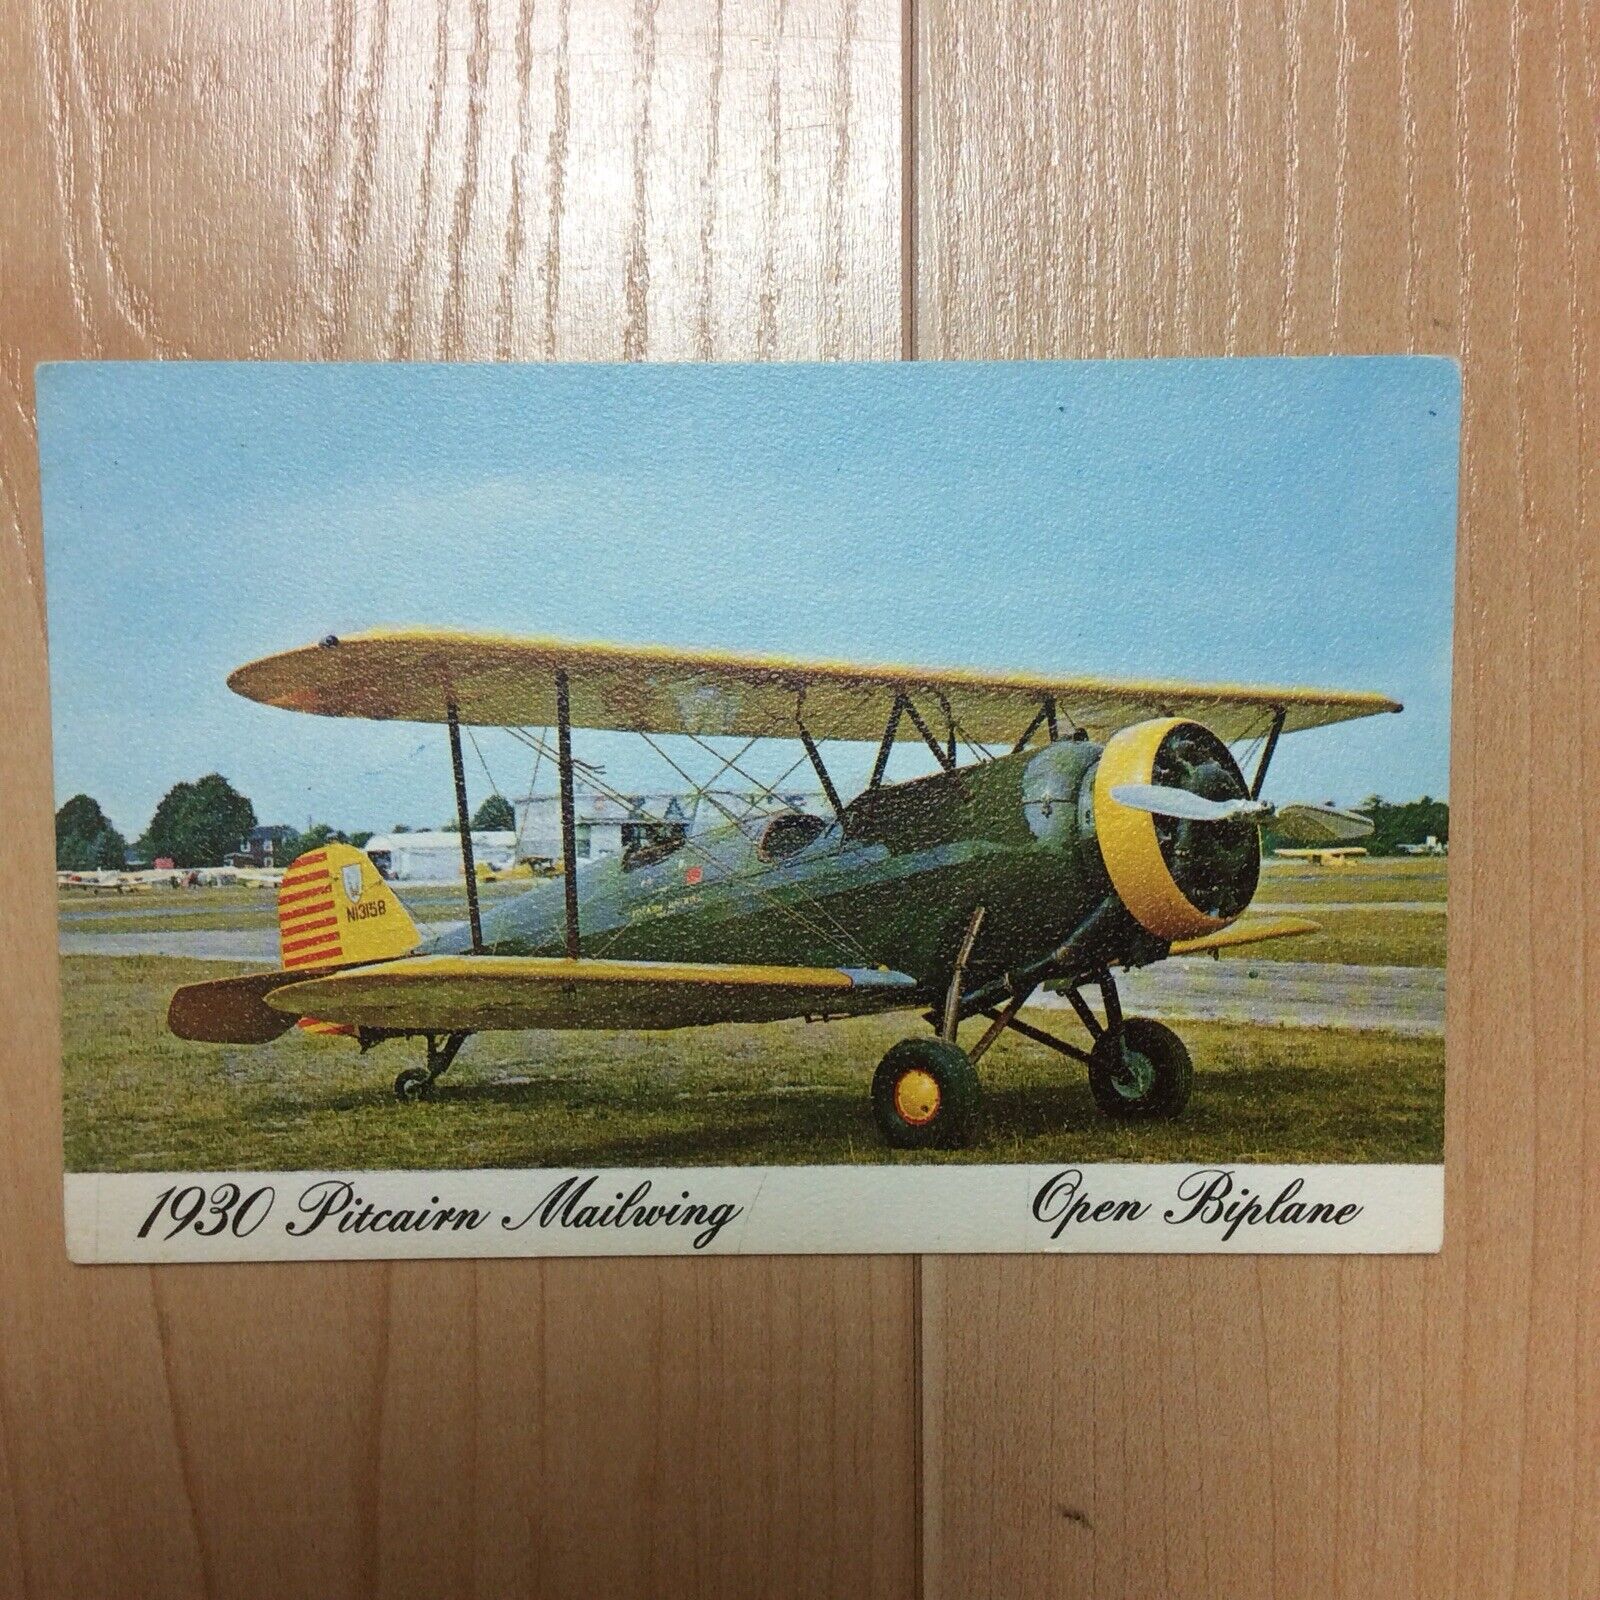 Vintage 1950’s Pitcairn Mailwing Biplane Airplane Postcard Air Mail plane